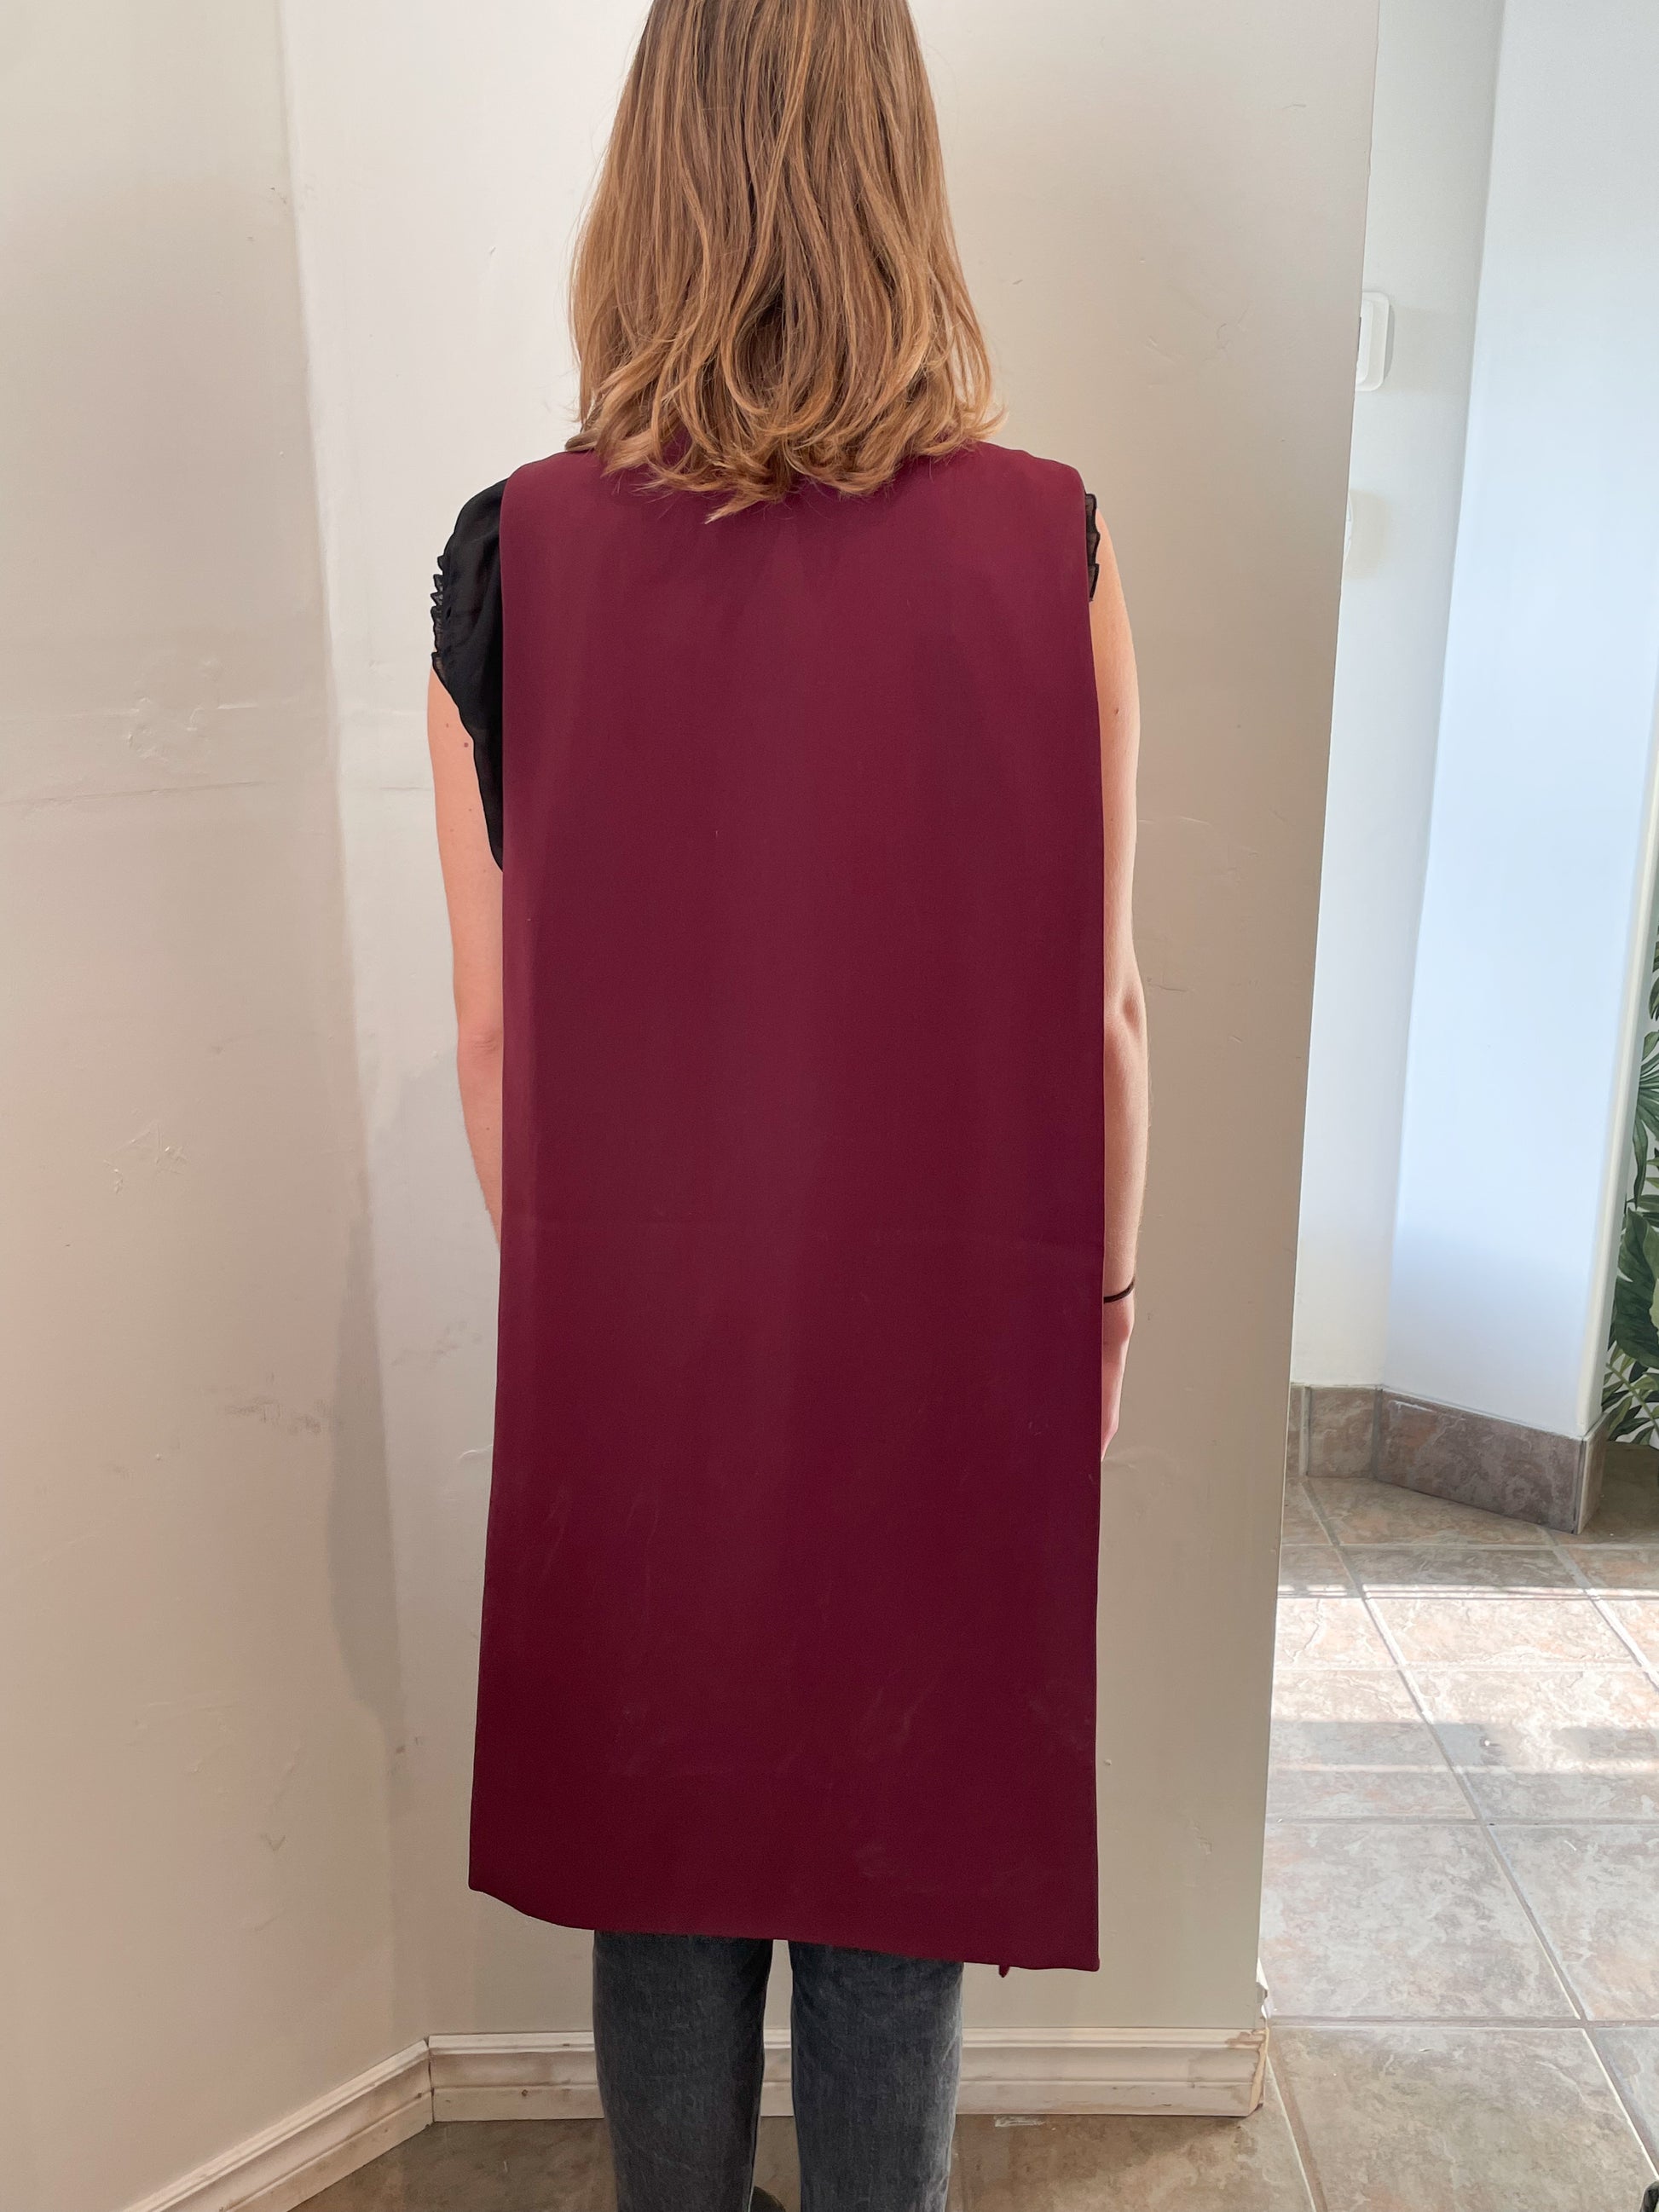 Melanie Lyne Burgundy Cutout Vest - S/M – Le Prix Fashion & Consulting